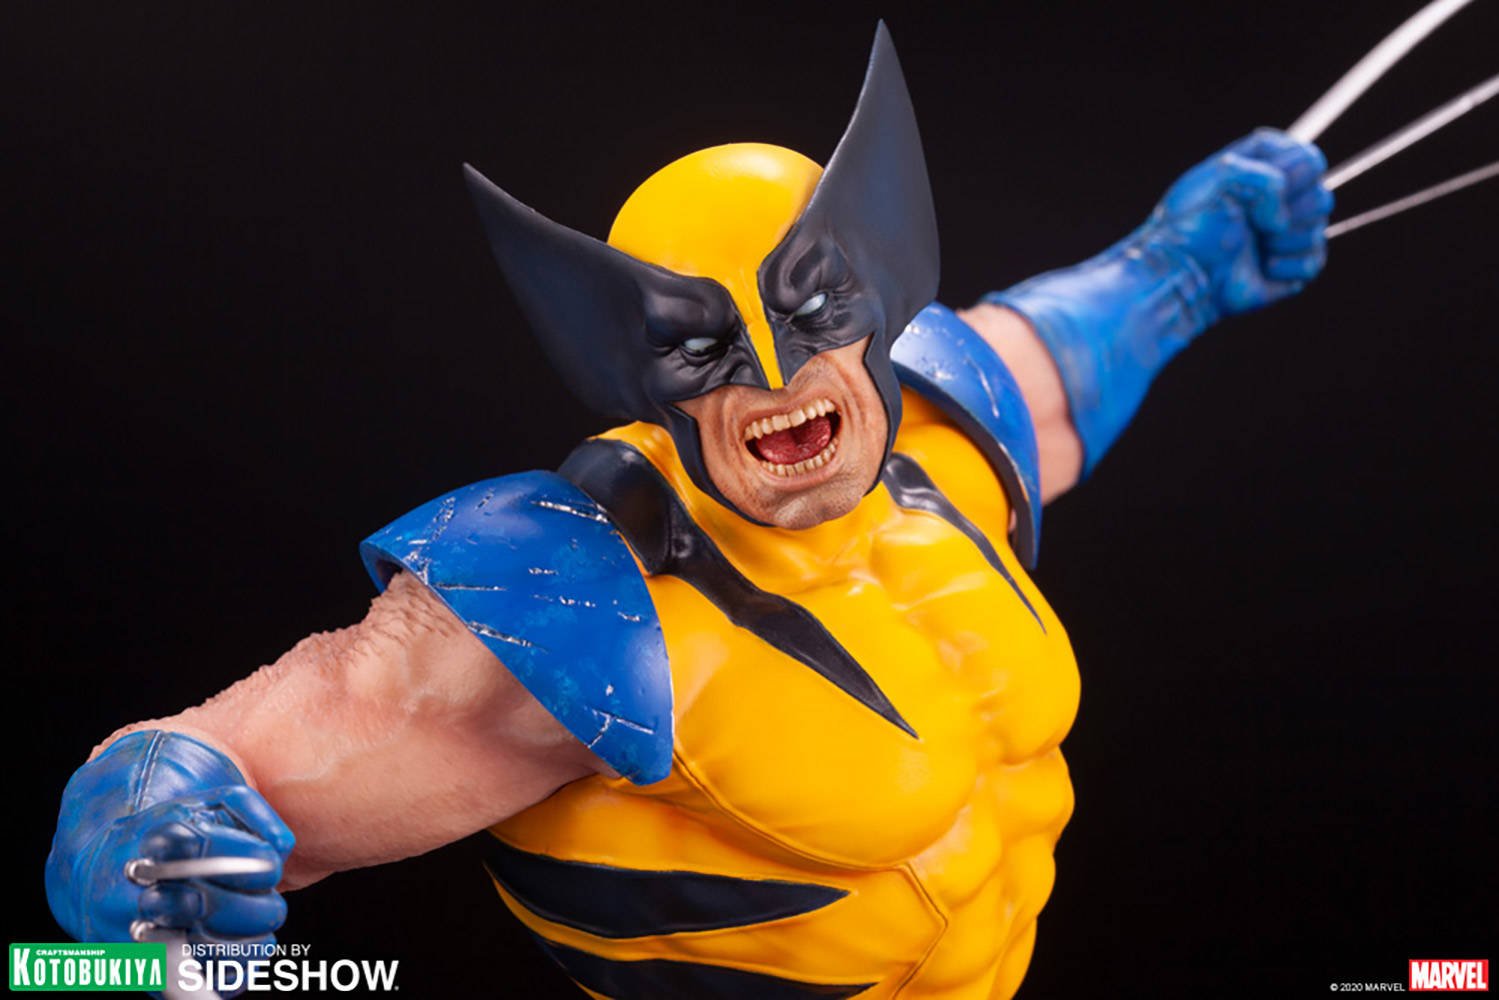 Immagine di Wolverine, da Kotobukiya una nuova statua in resina